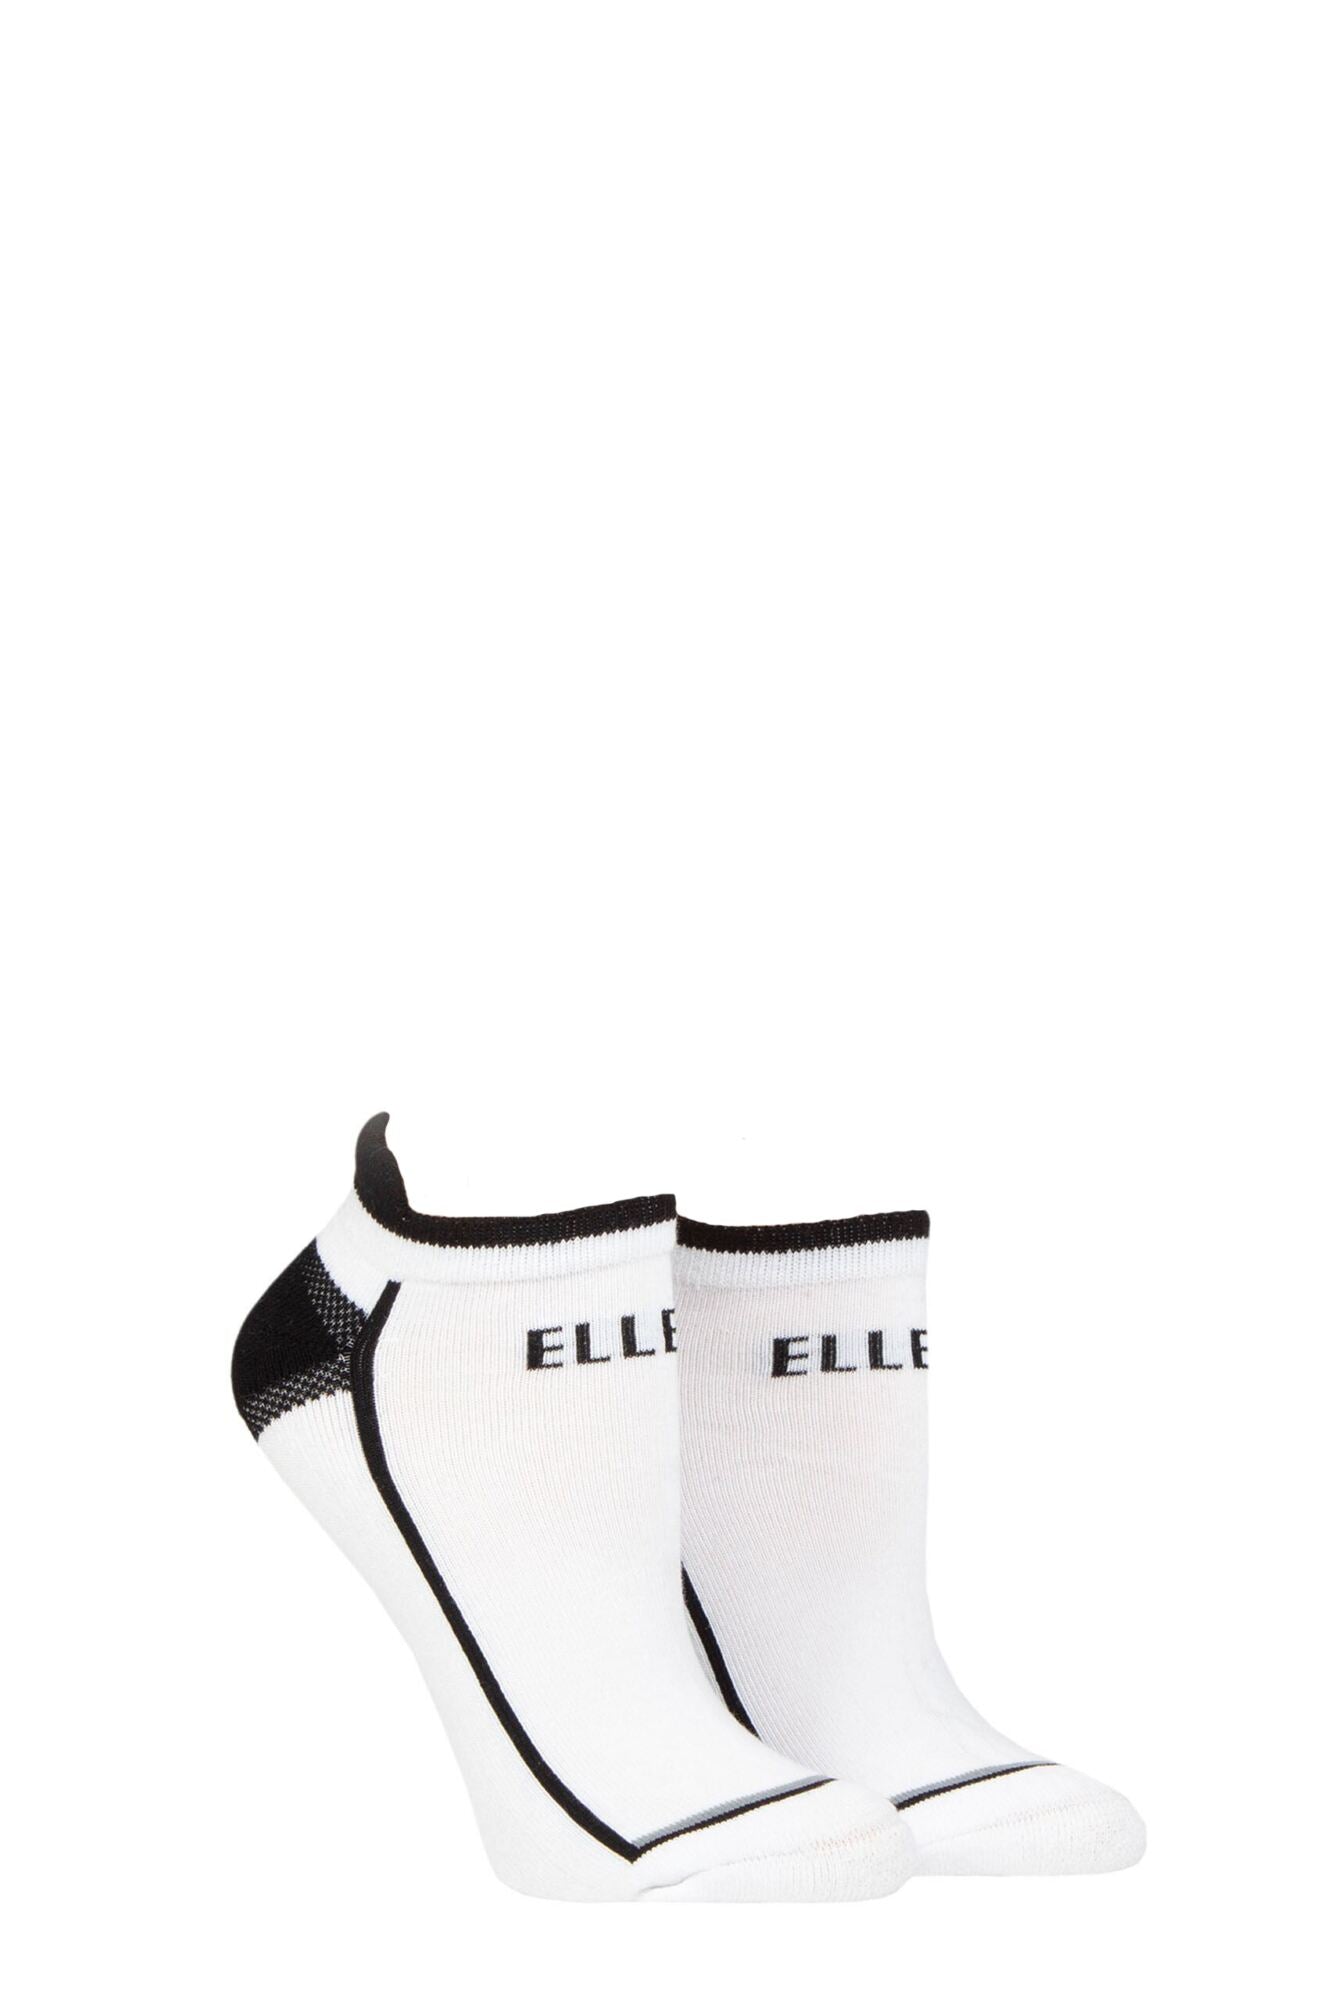 Elle-Ladies Cushioned Trainer Socks-2 Pair Pack-White/White